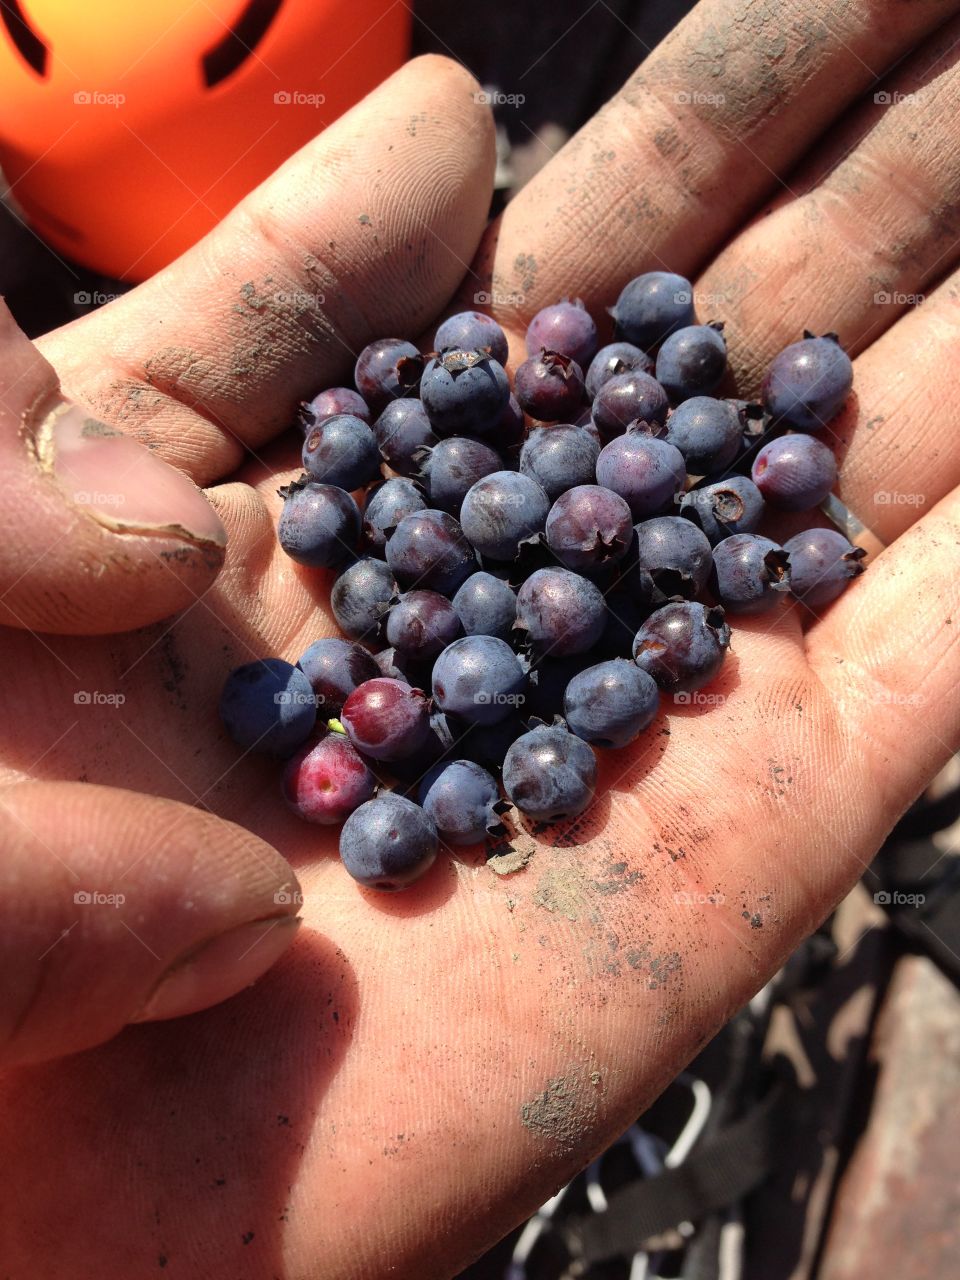 Forging for wild berries in Alberta canada